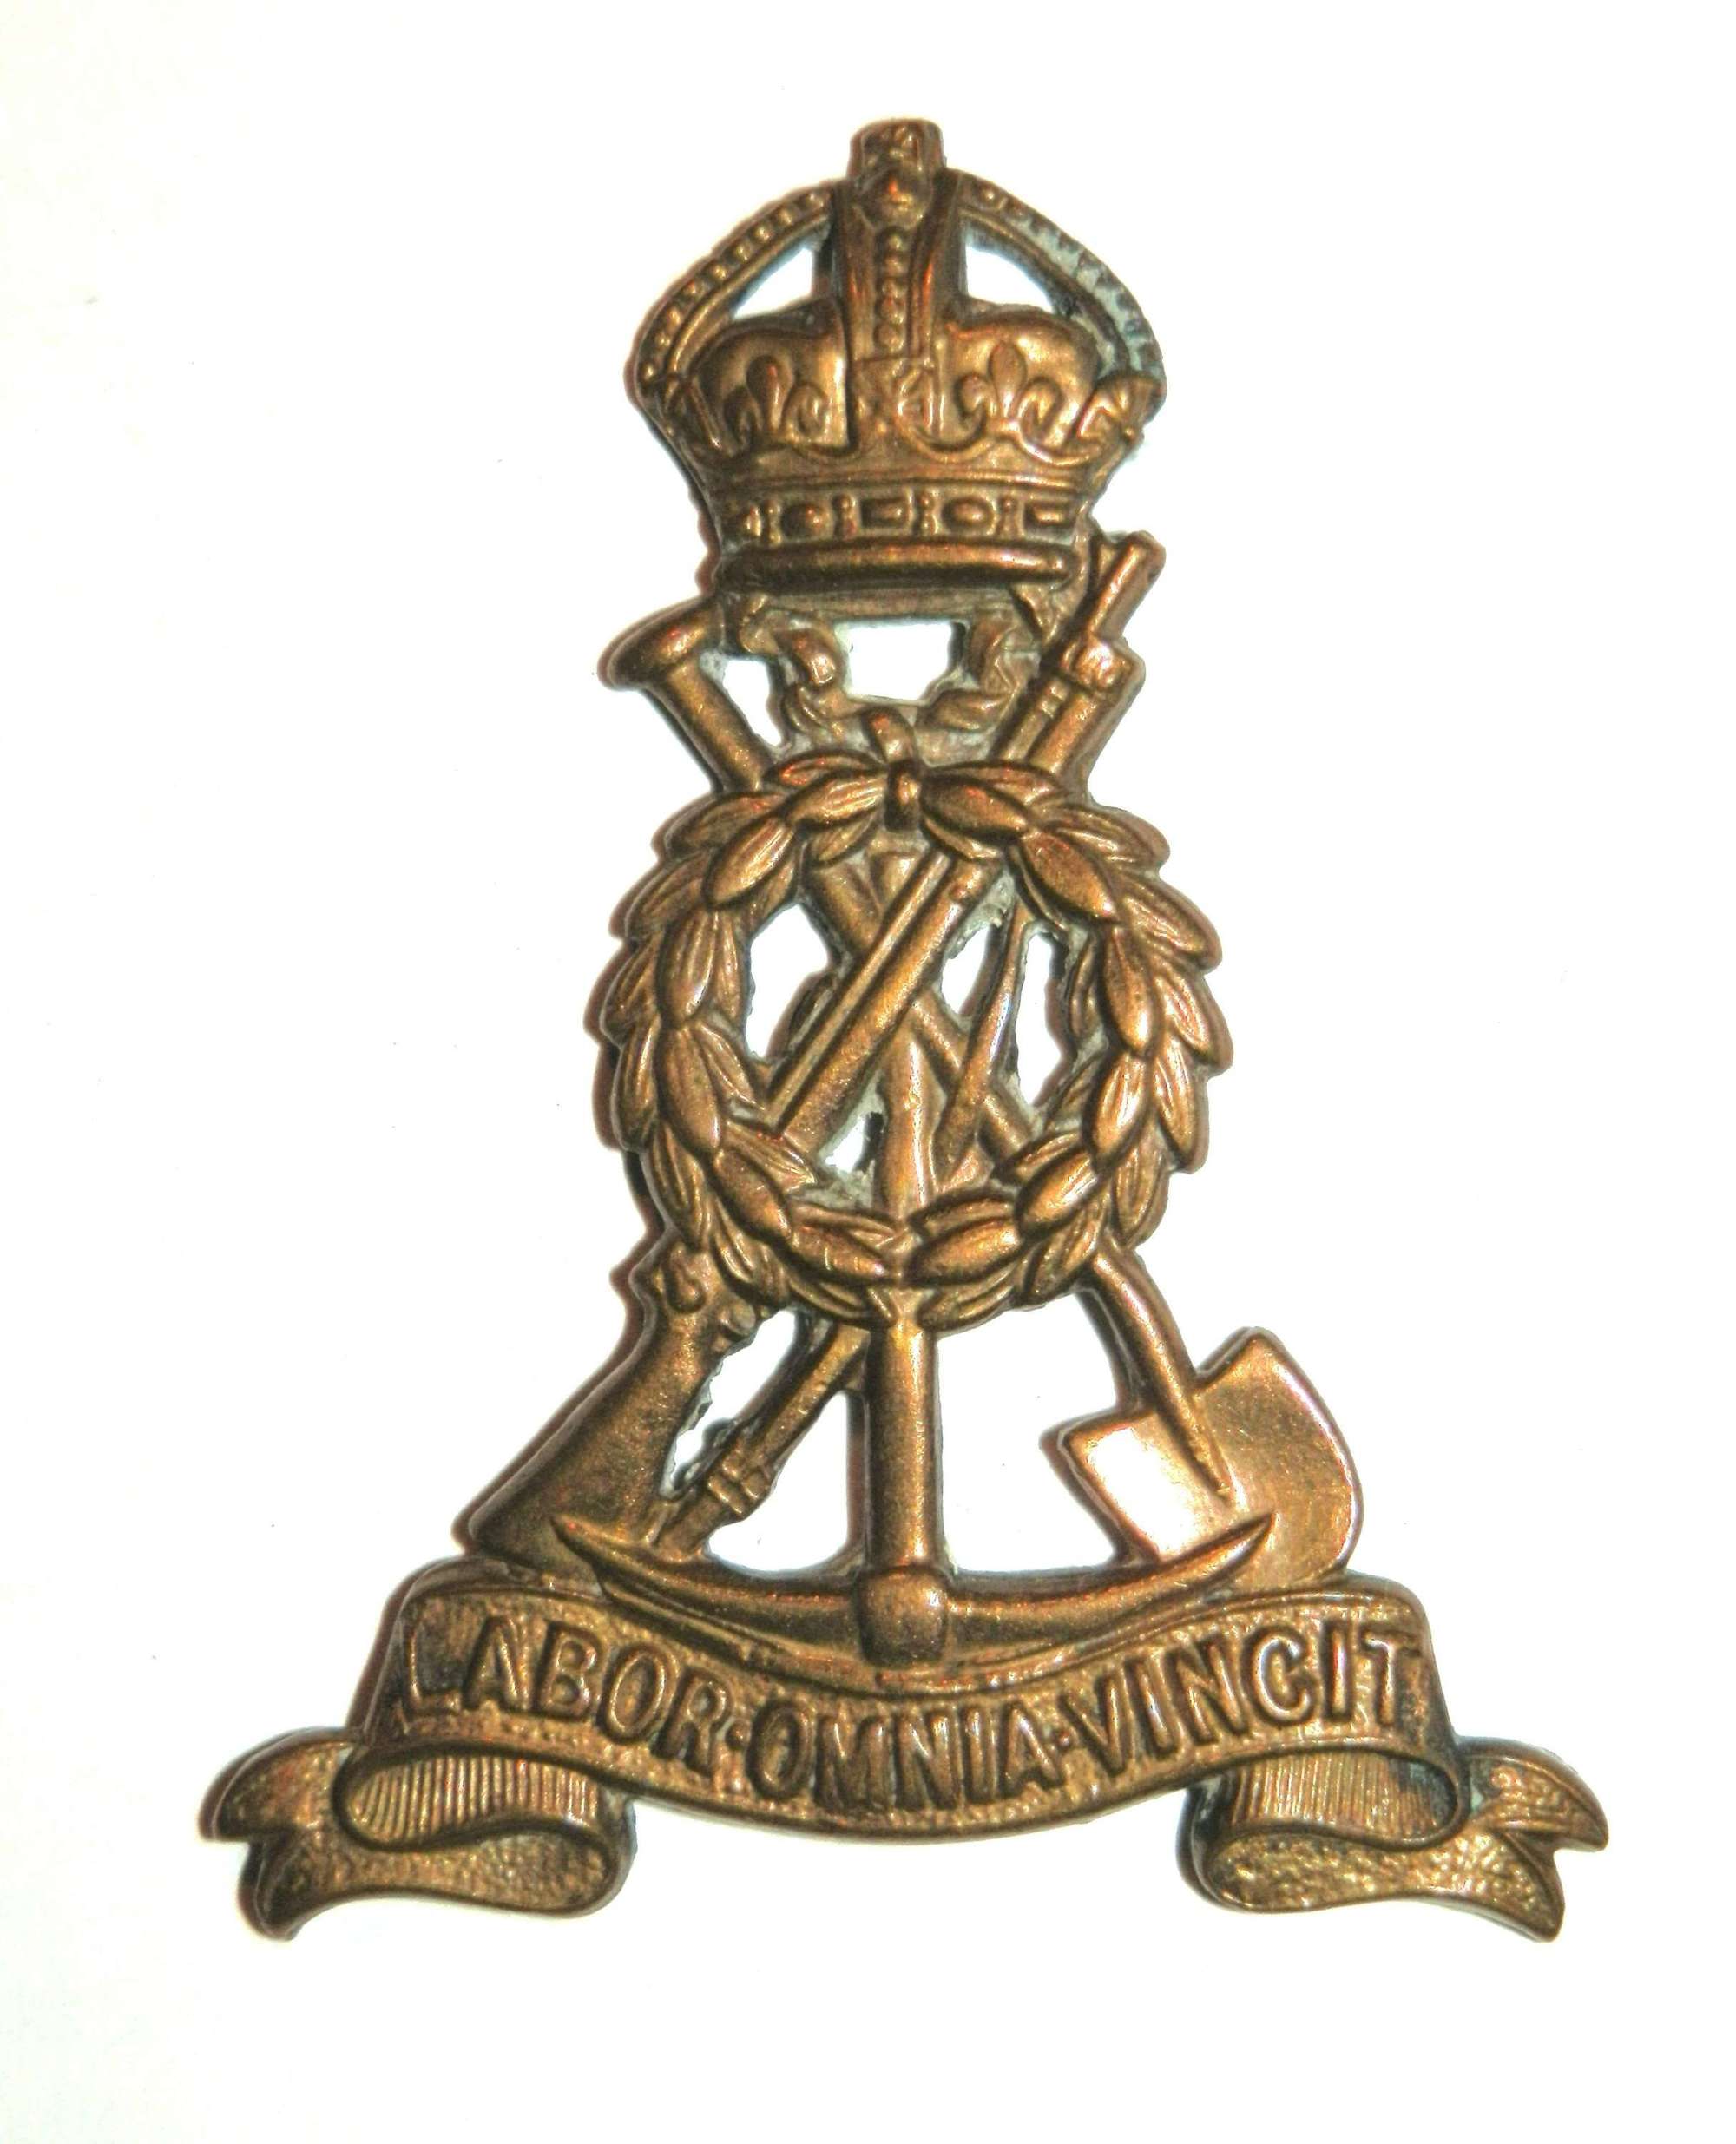 Labour Corps Cap Badge.